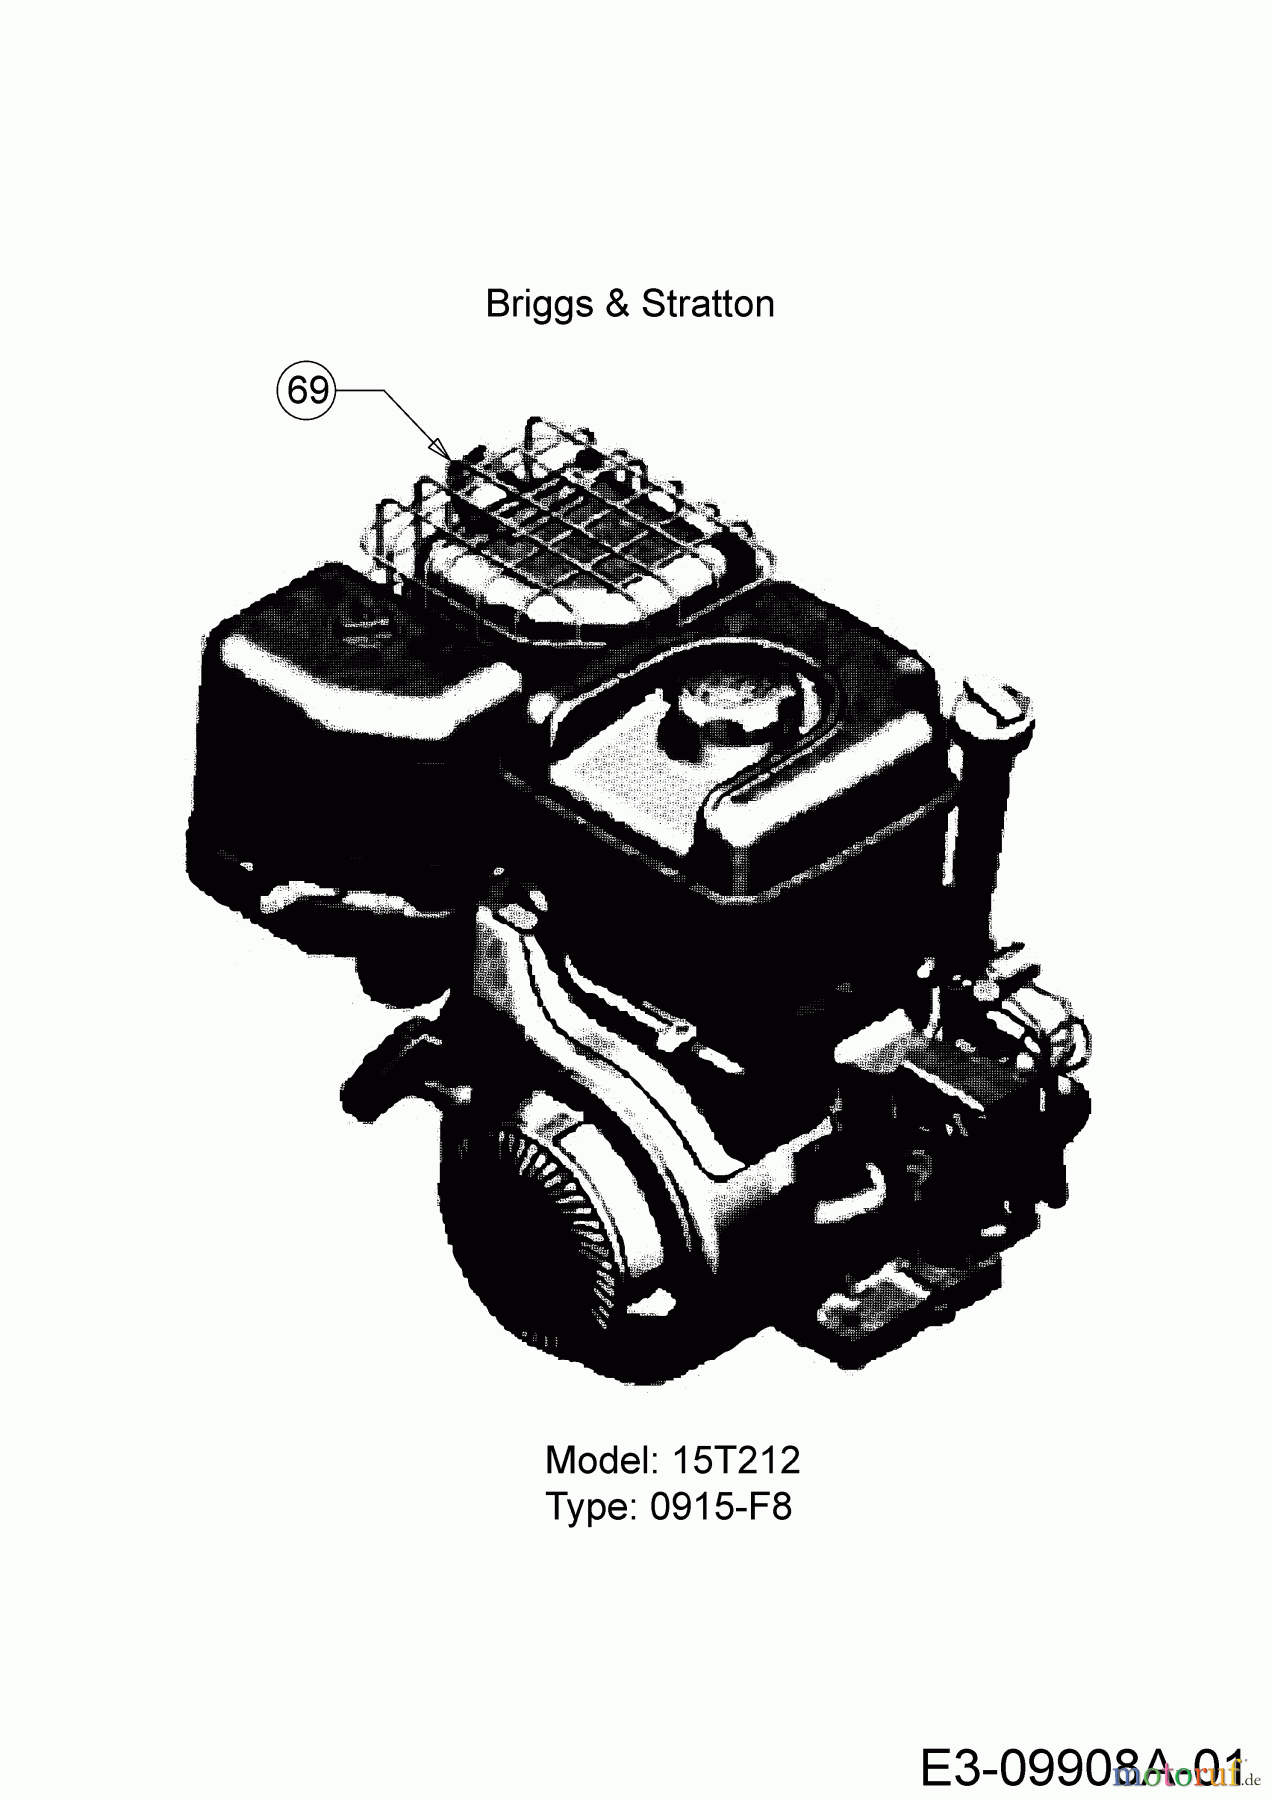  Troy-Bilt Chipper CS 4325 24B-424M766  (2013) Engine Briggs & Stratton